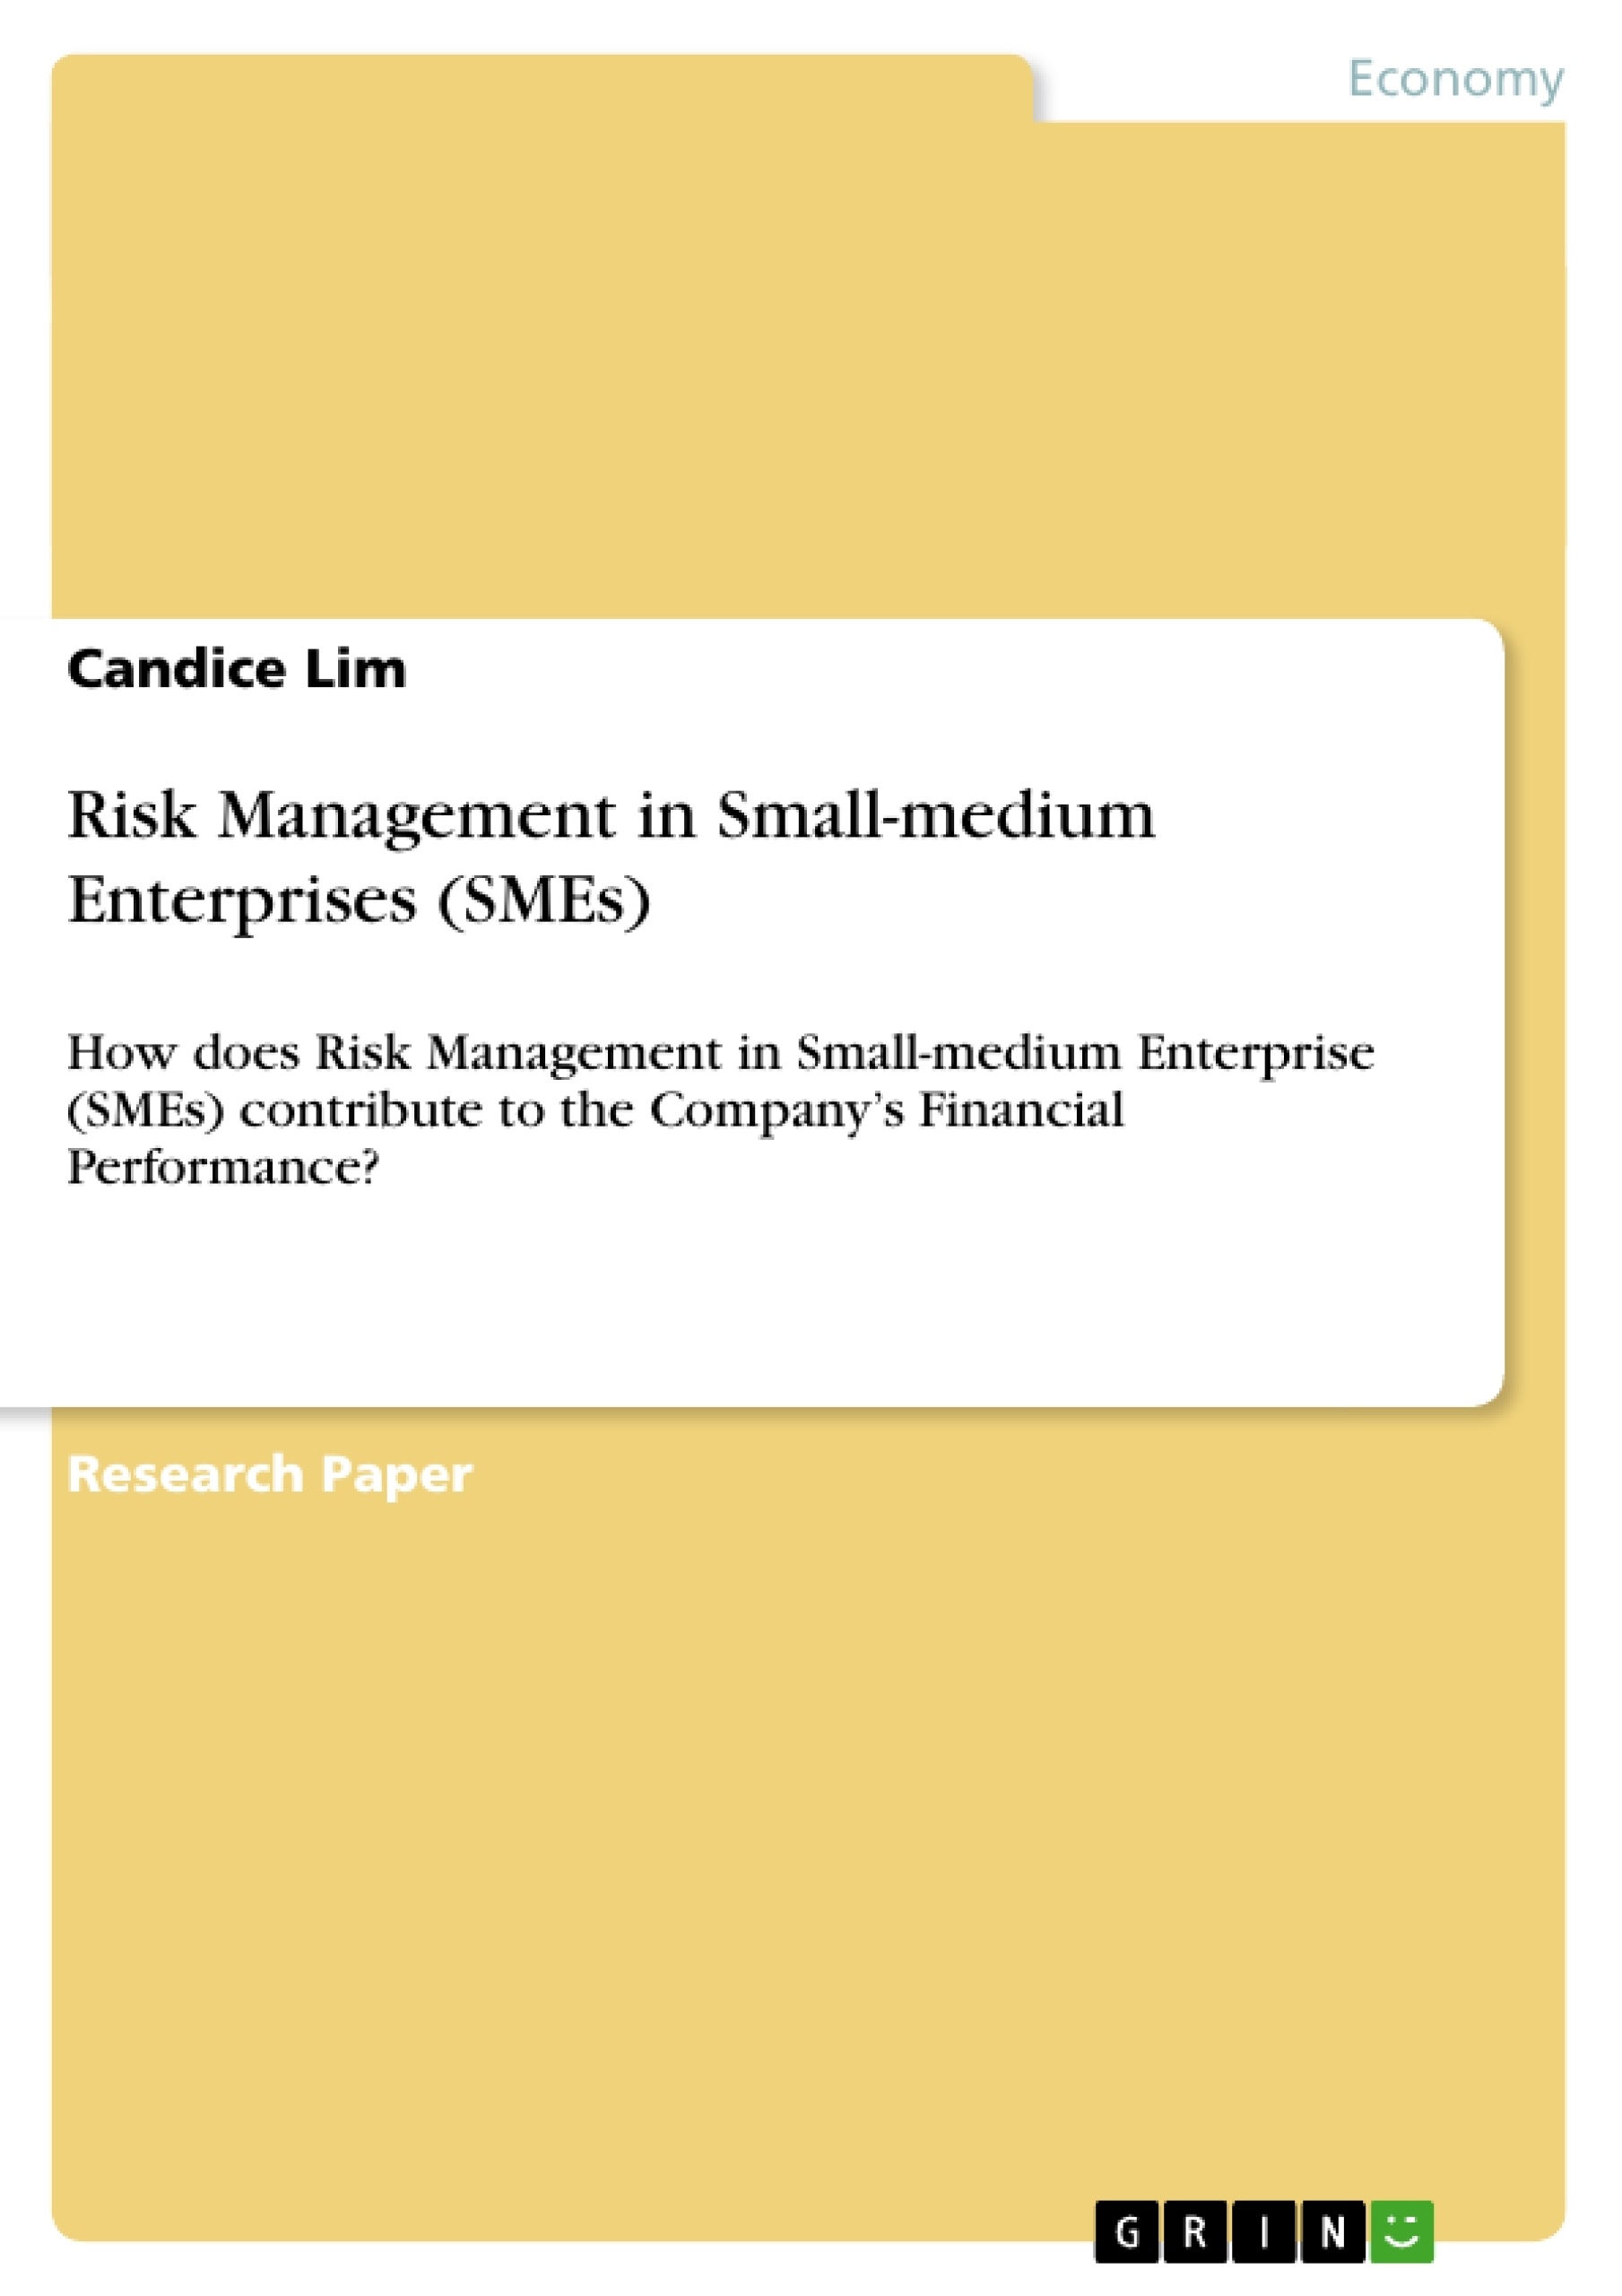 Title: Risk Management in Small-medium Enterprises (SMEs)